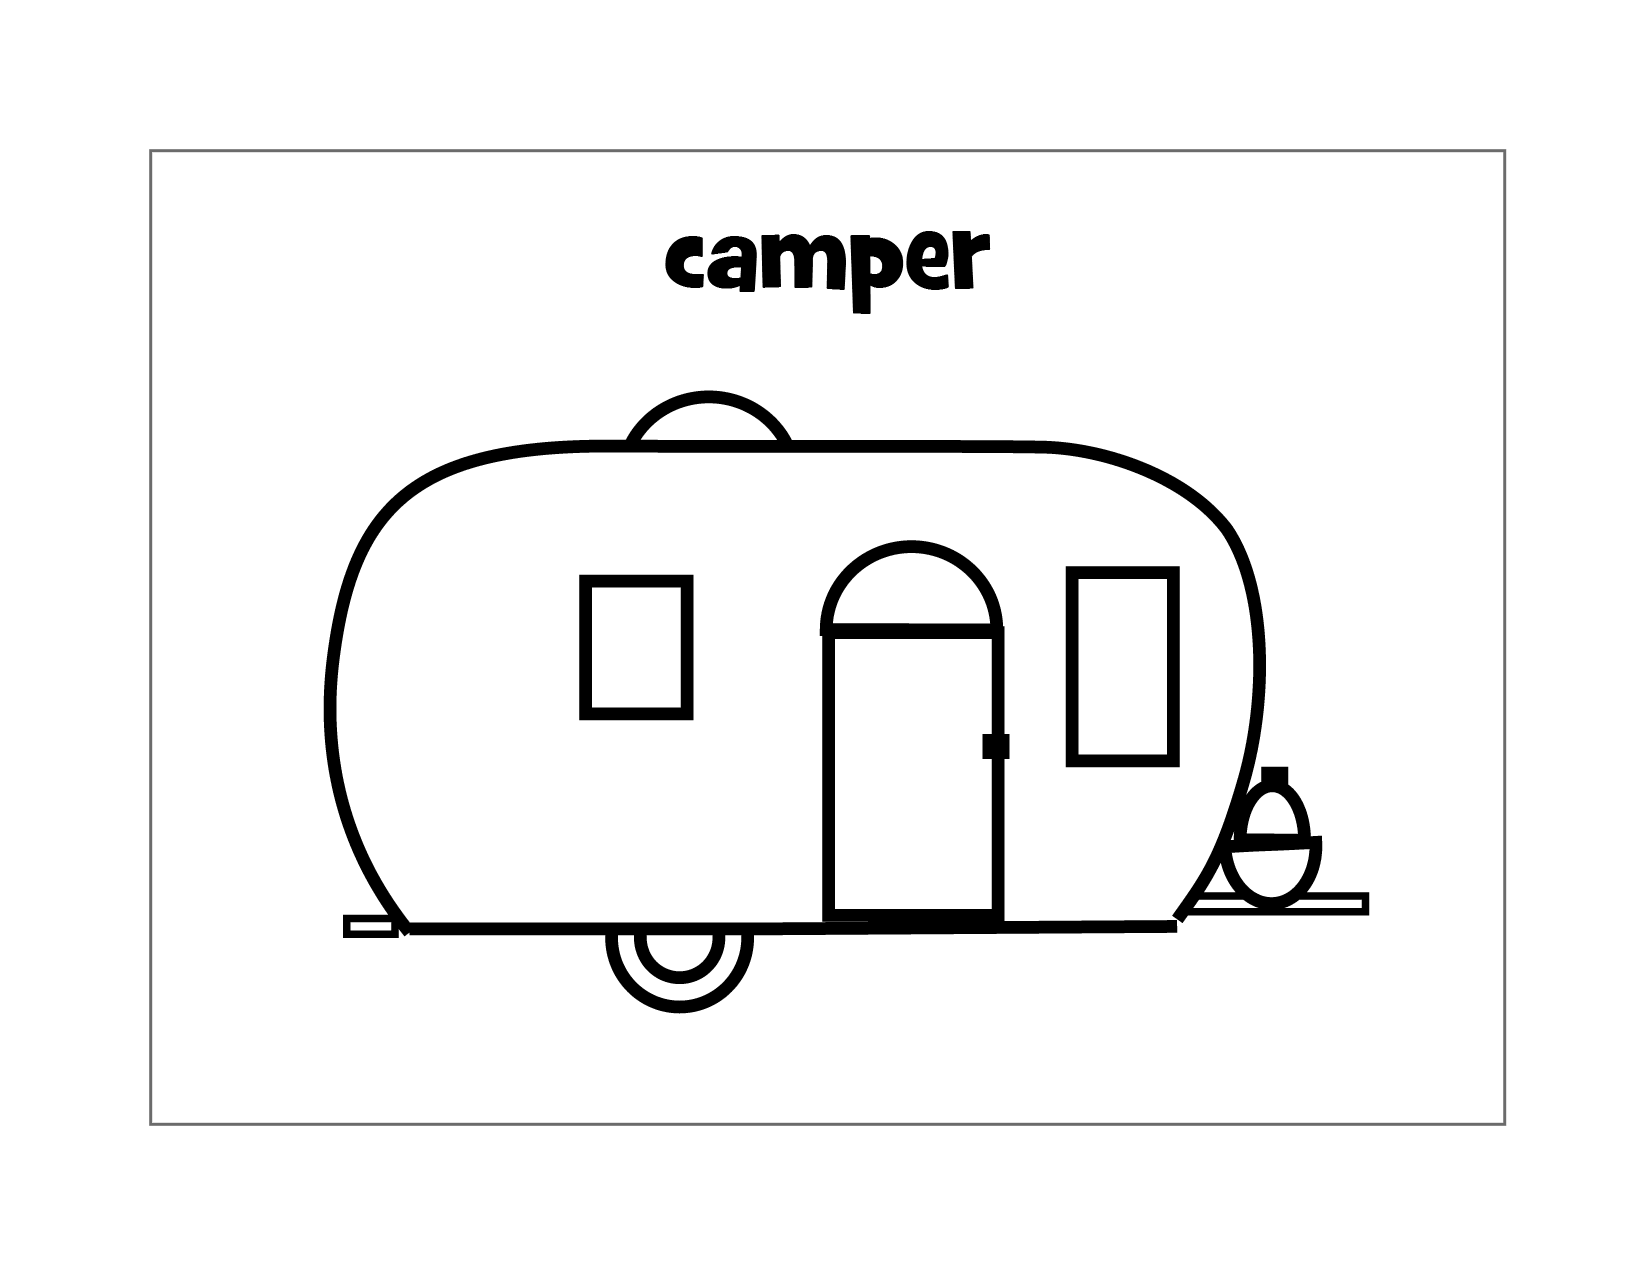 Fun Camper Coloring Page